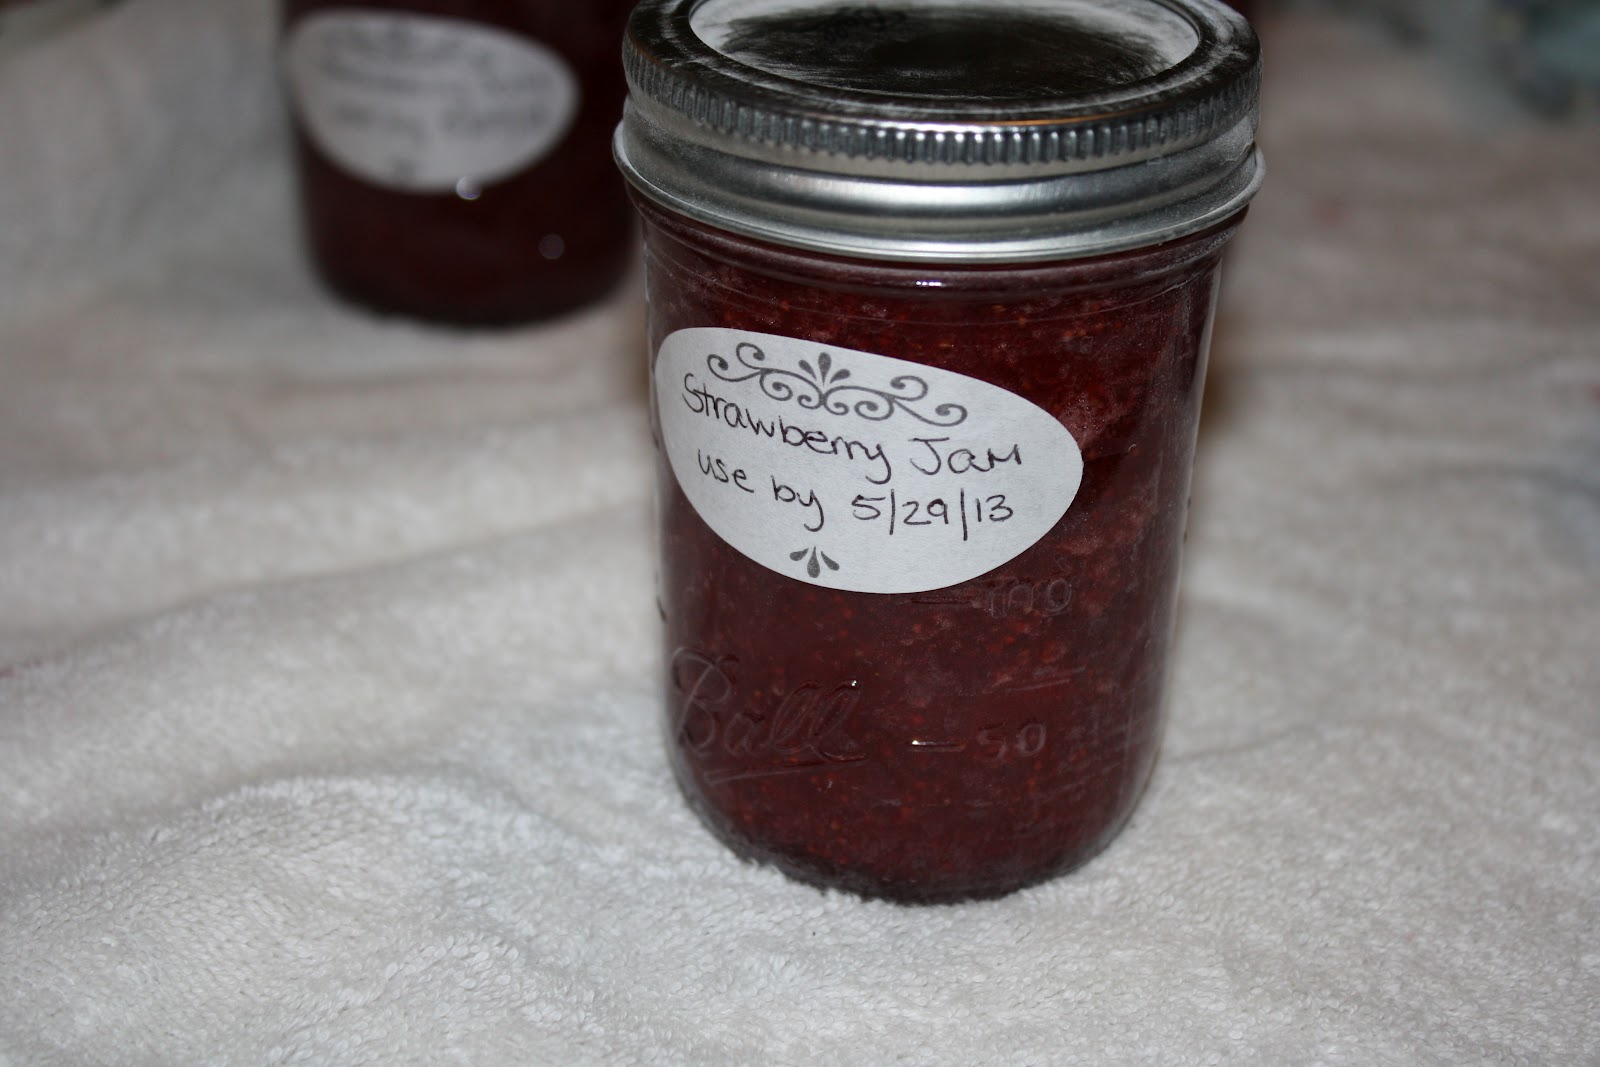 waterbath canned jam